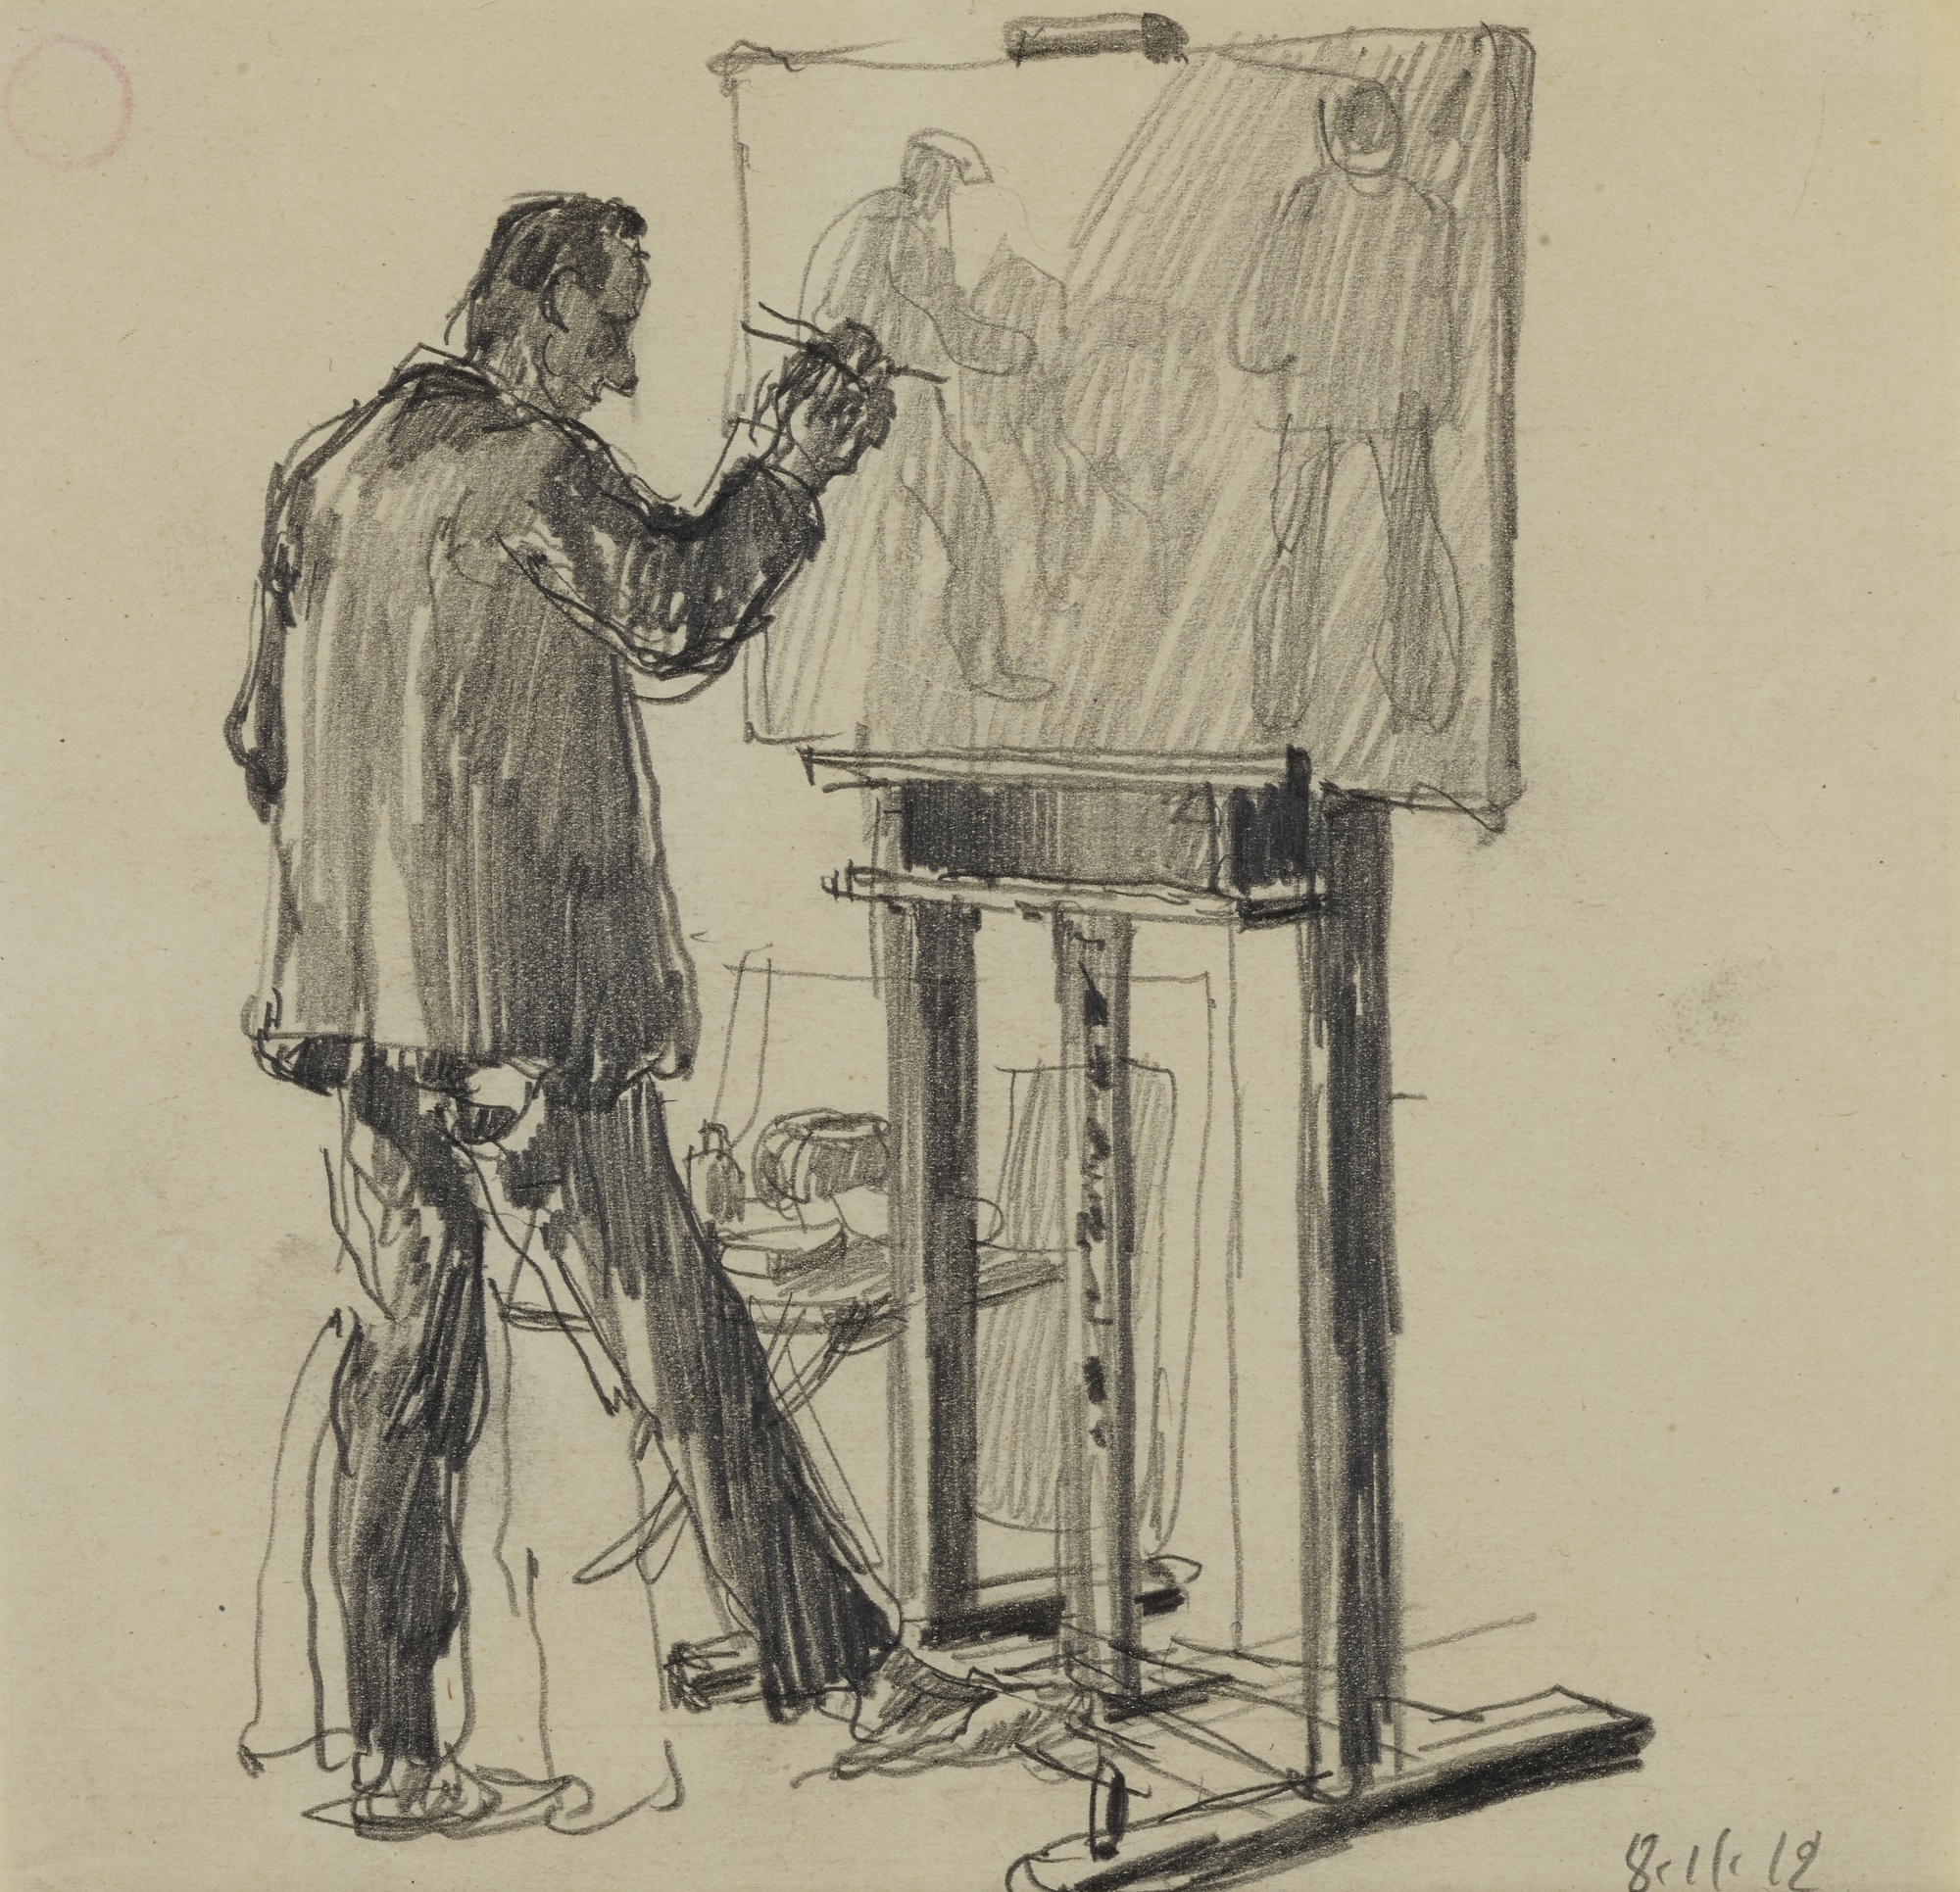 ARTIST'S STUDIO by George Grosz, 1912